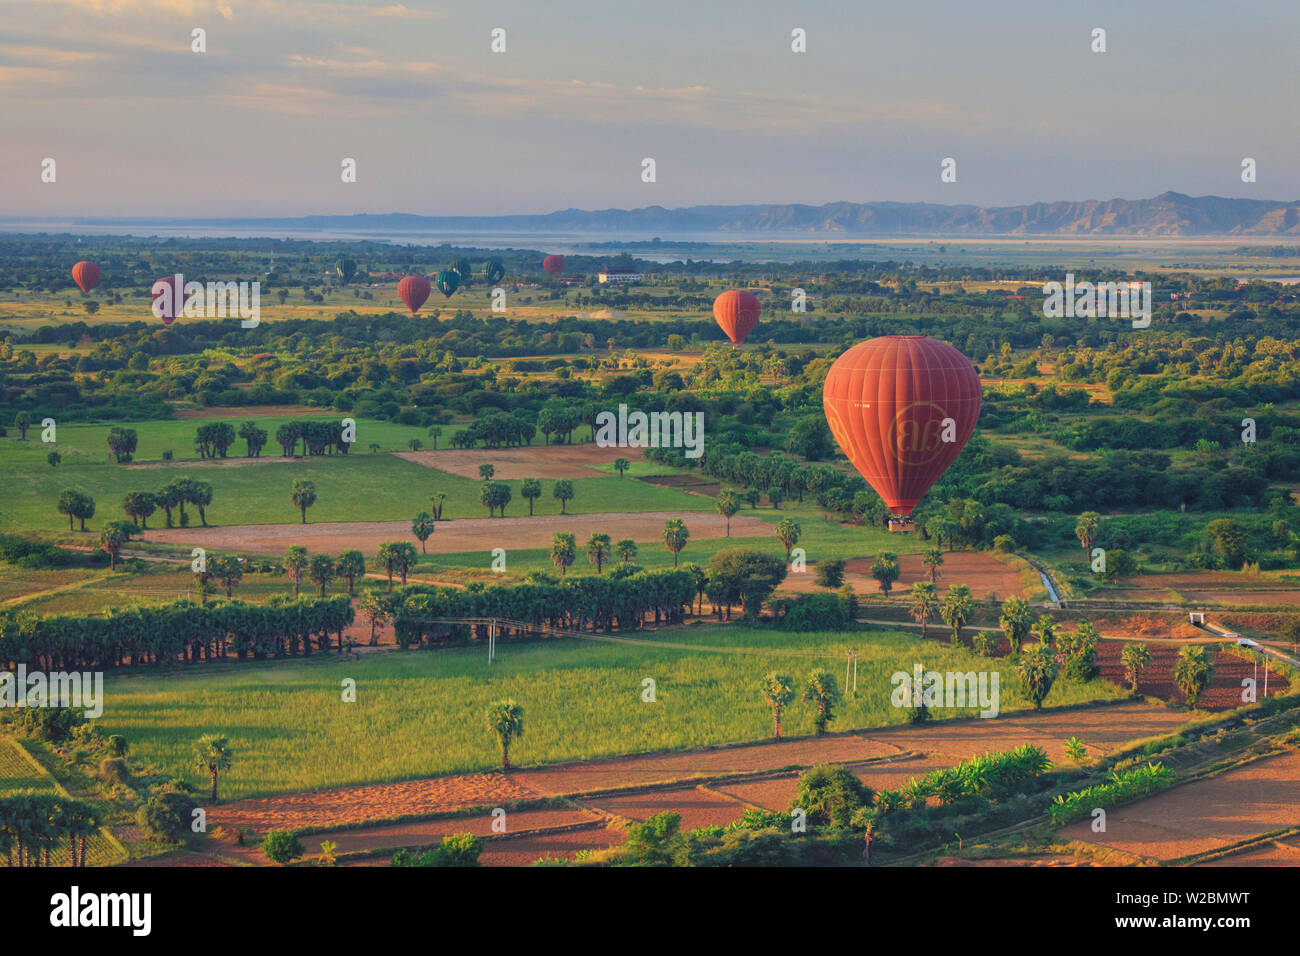 Myanmar (Burma), Temples of Bagan (Unesco world Heritage Site), Baloon flying over Temple site Stock Photo